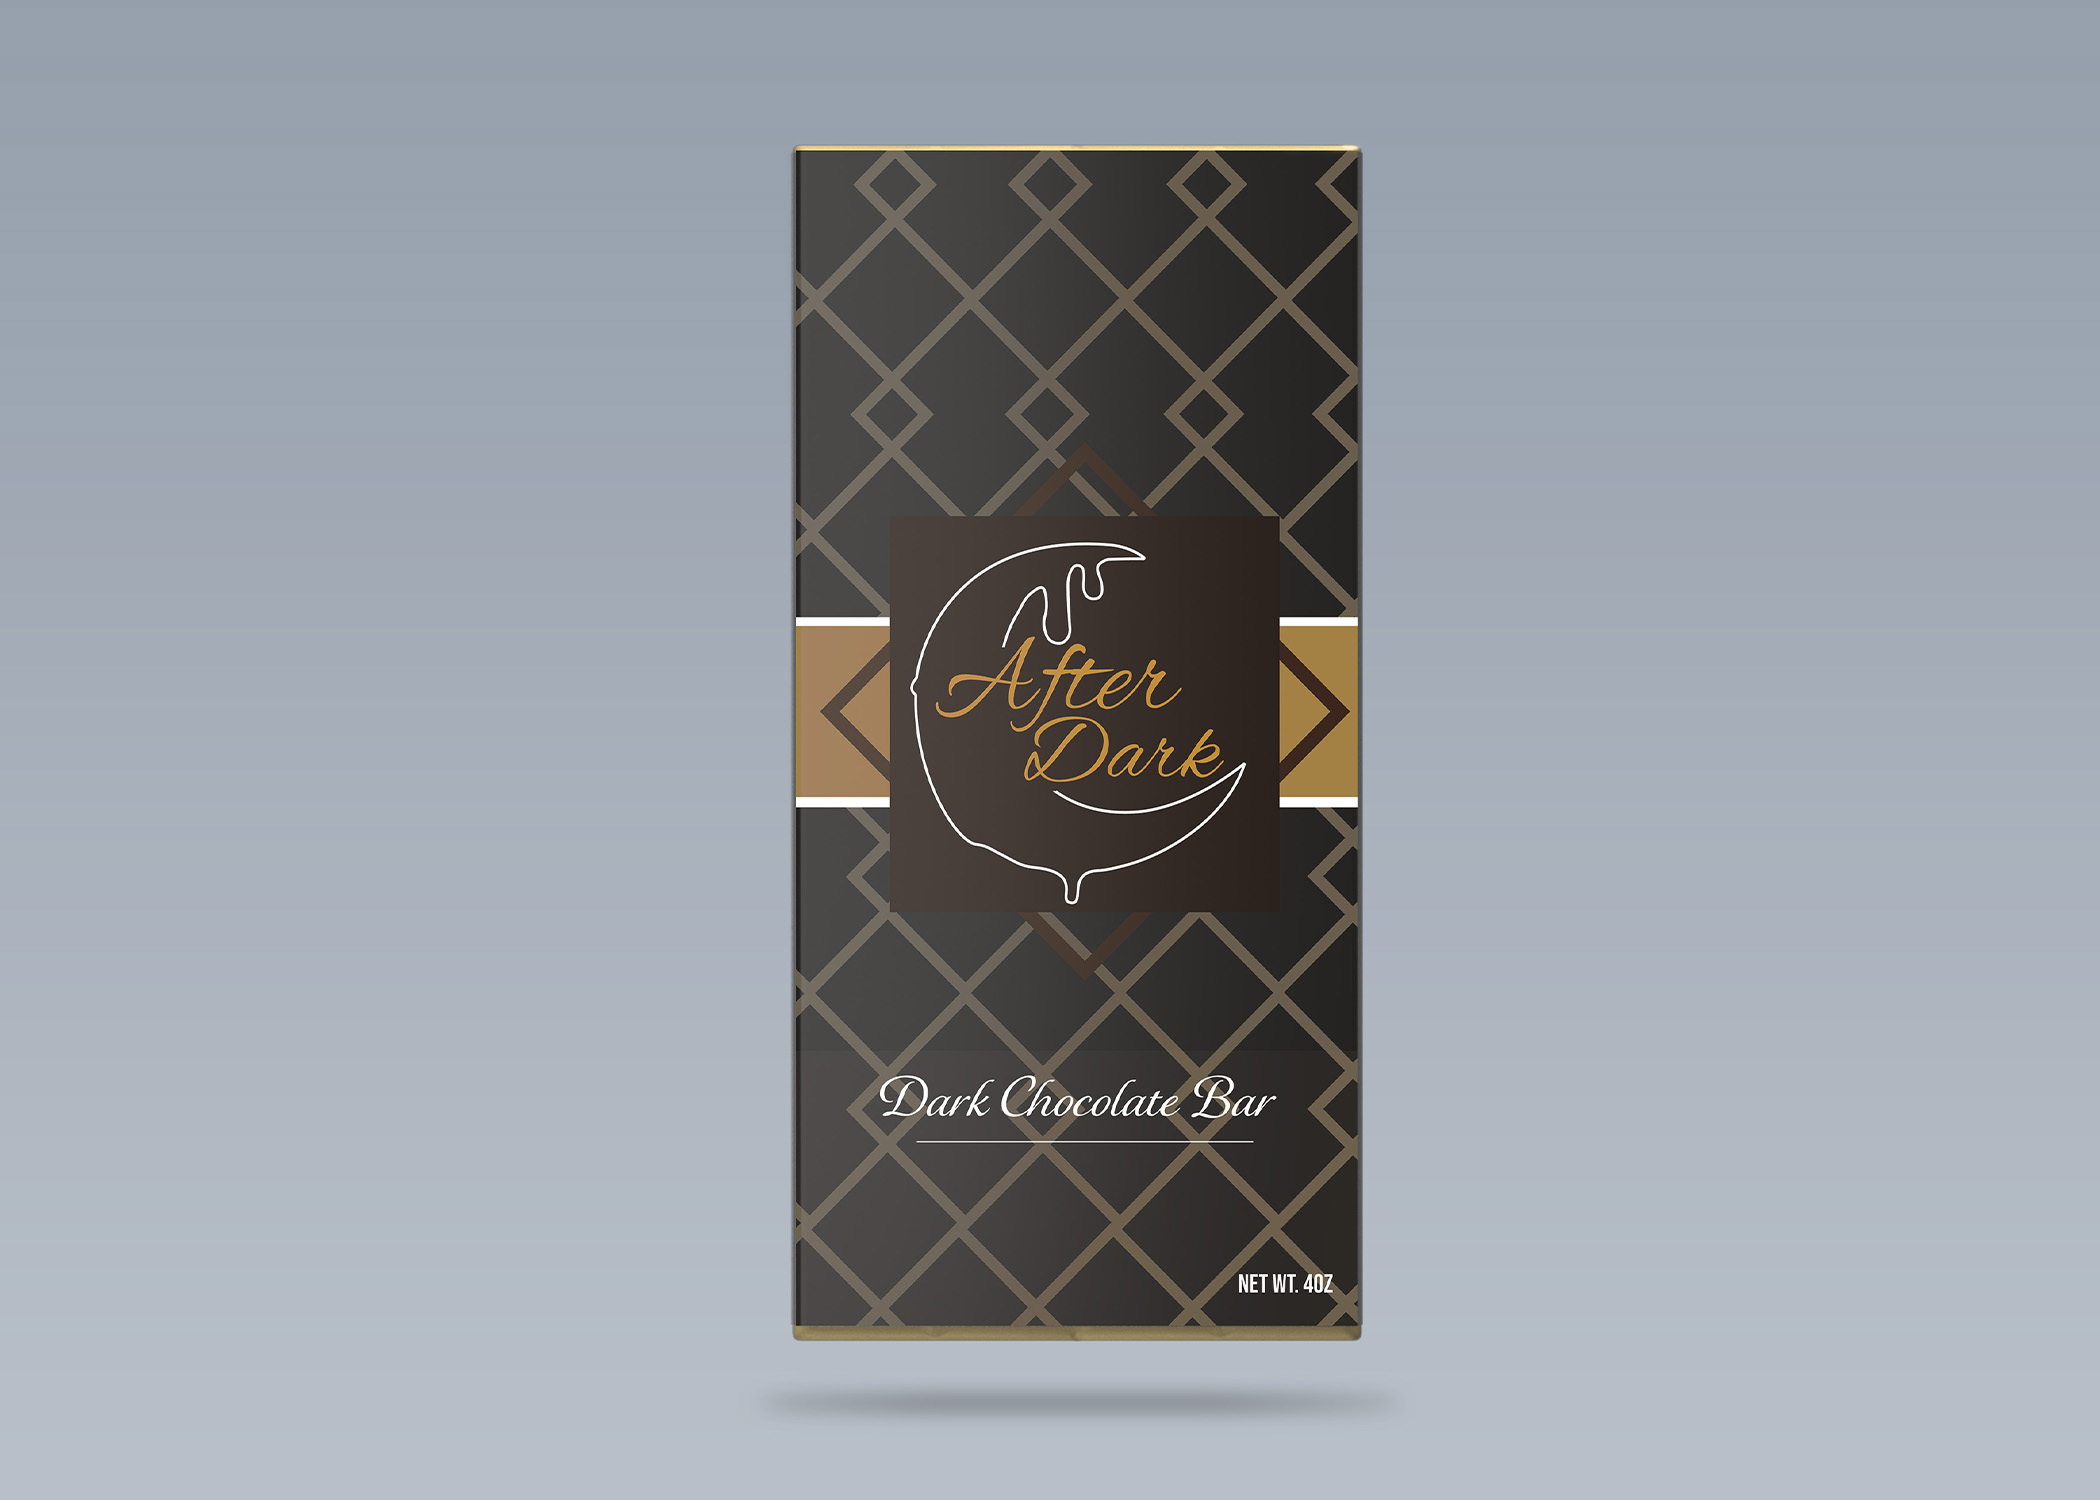 Chocolate bar design